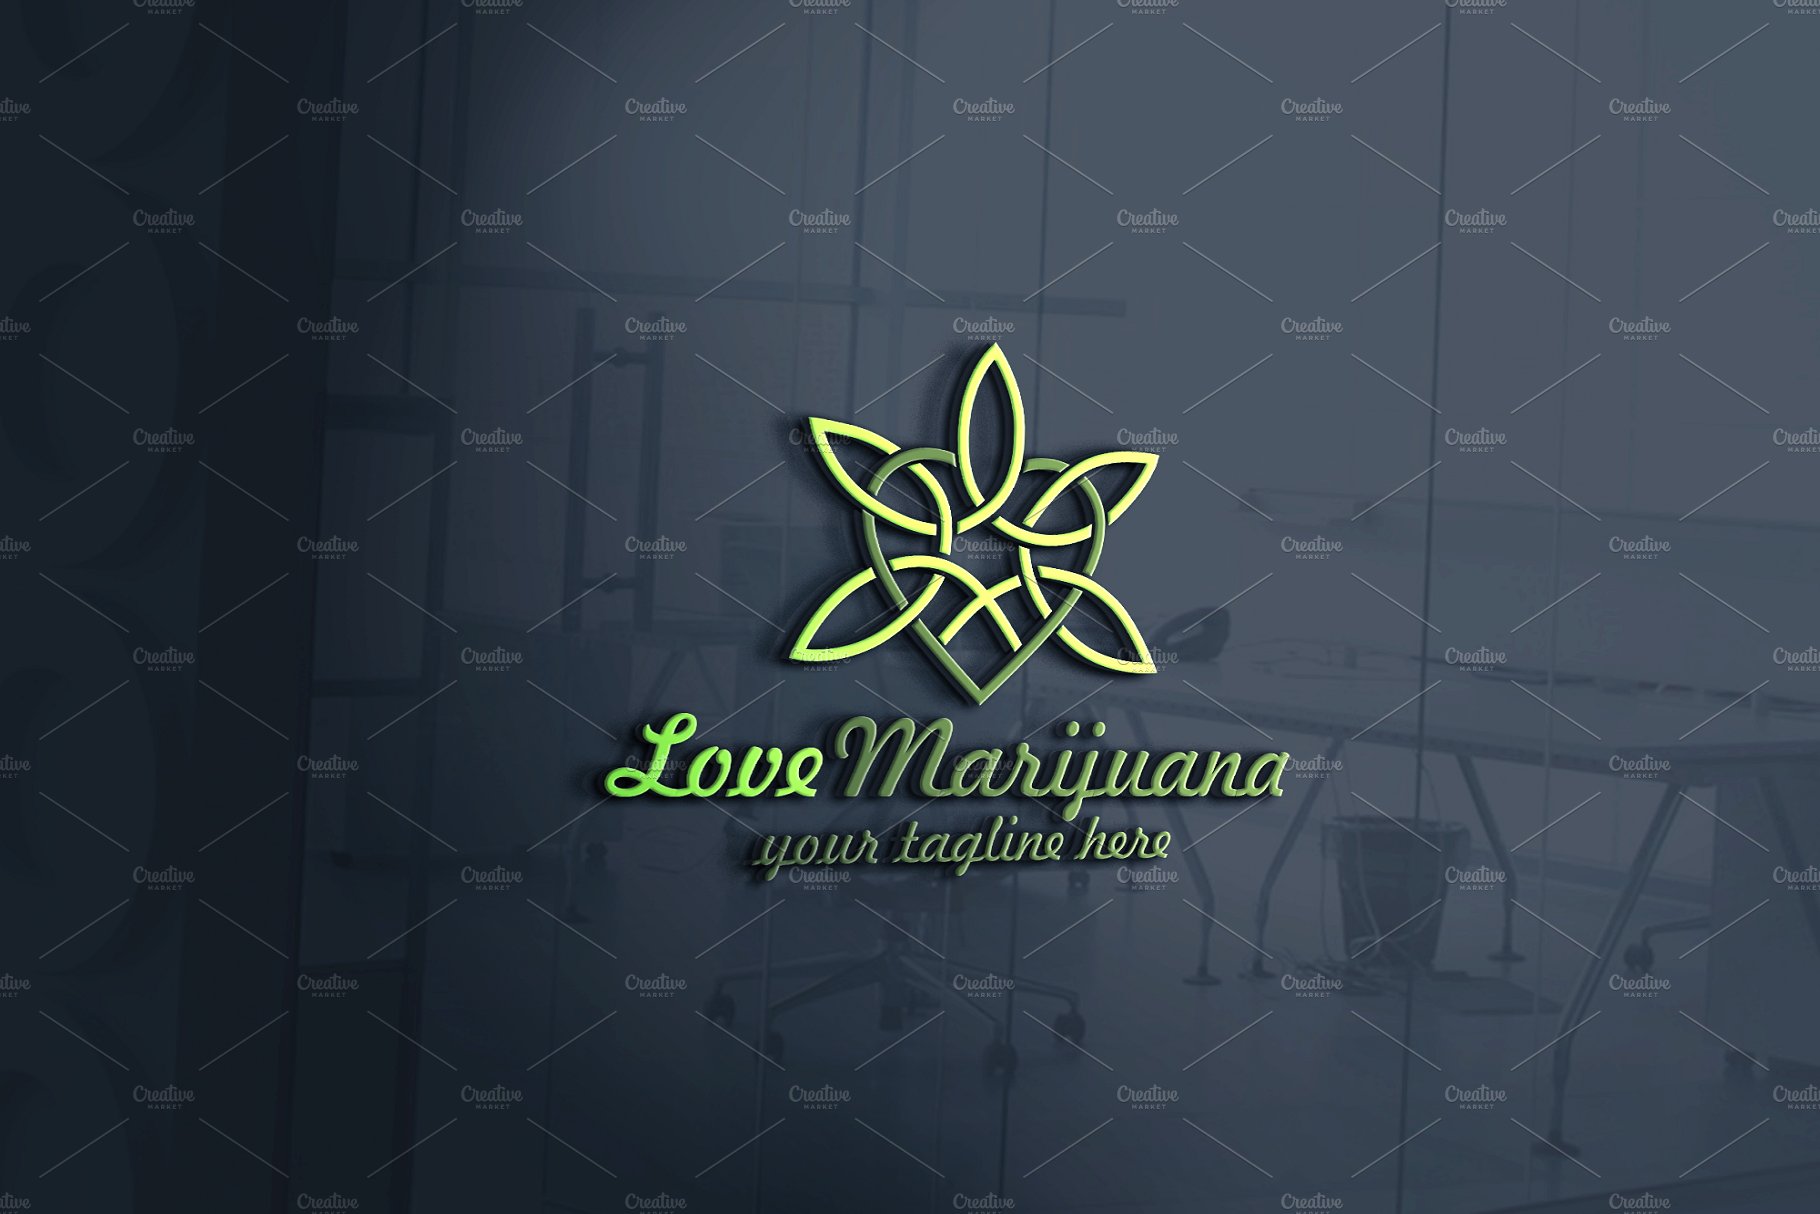 Love Marijuana | Cannabis Logo cover image.